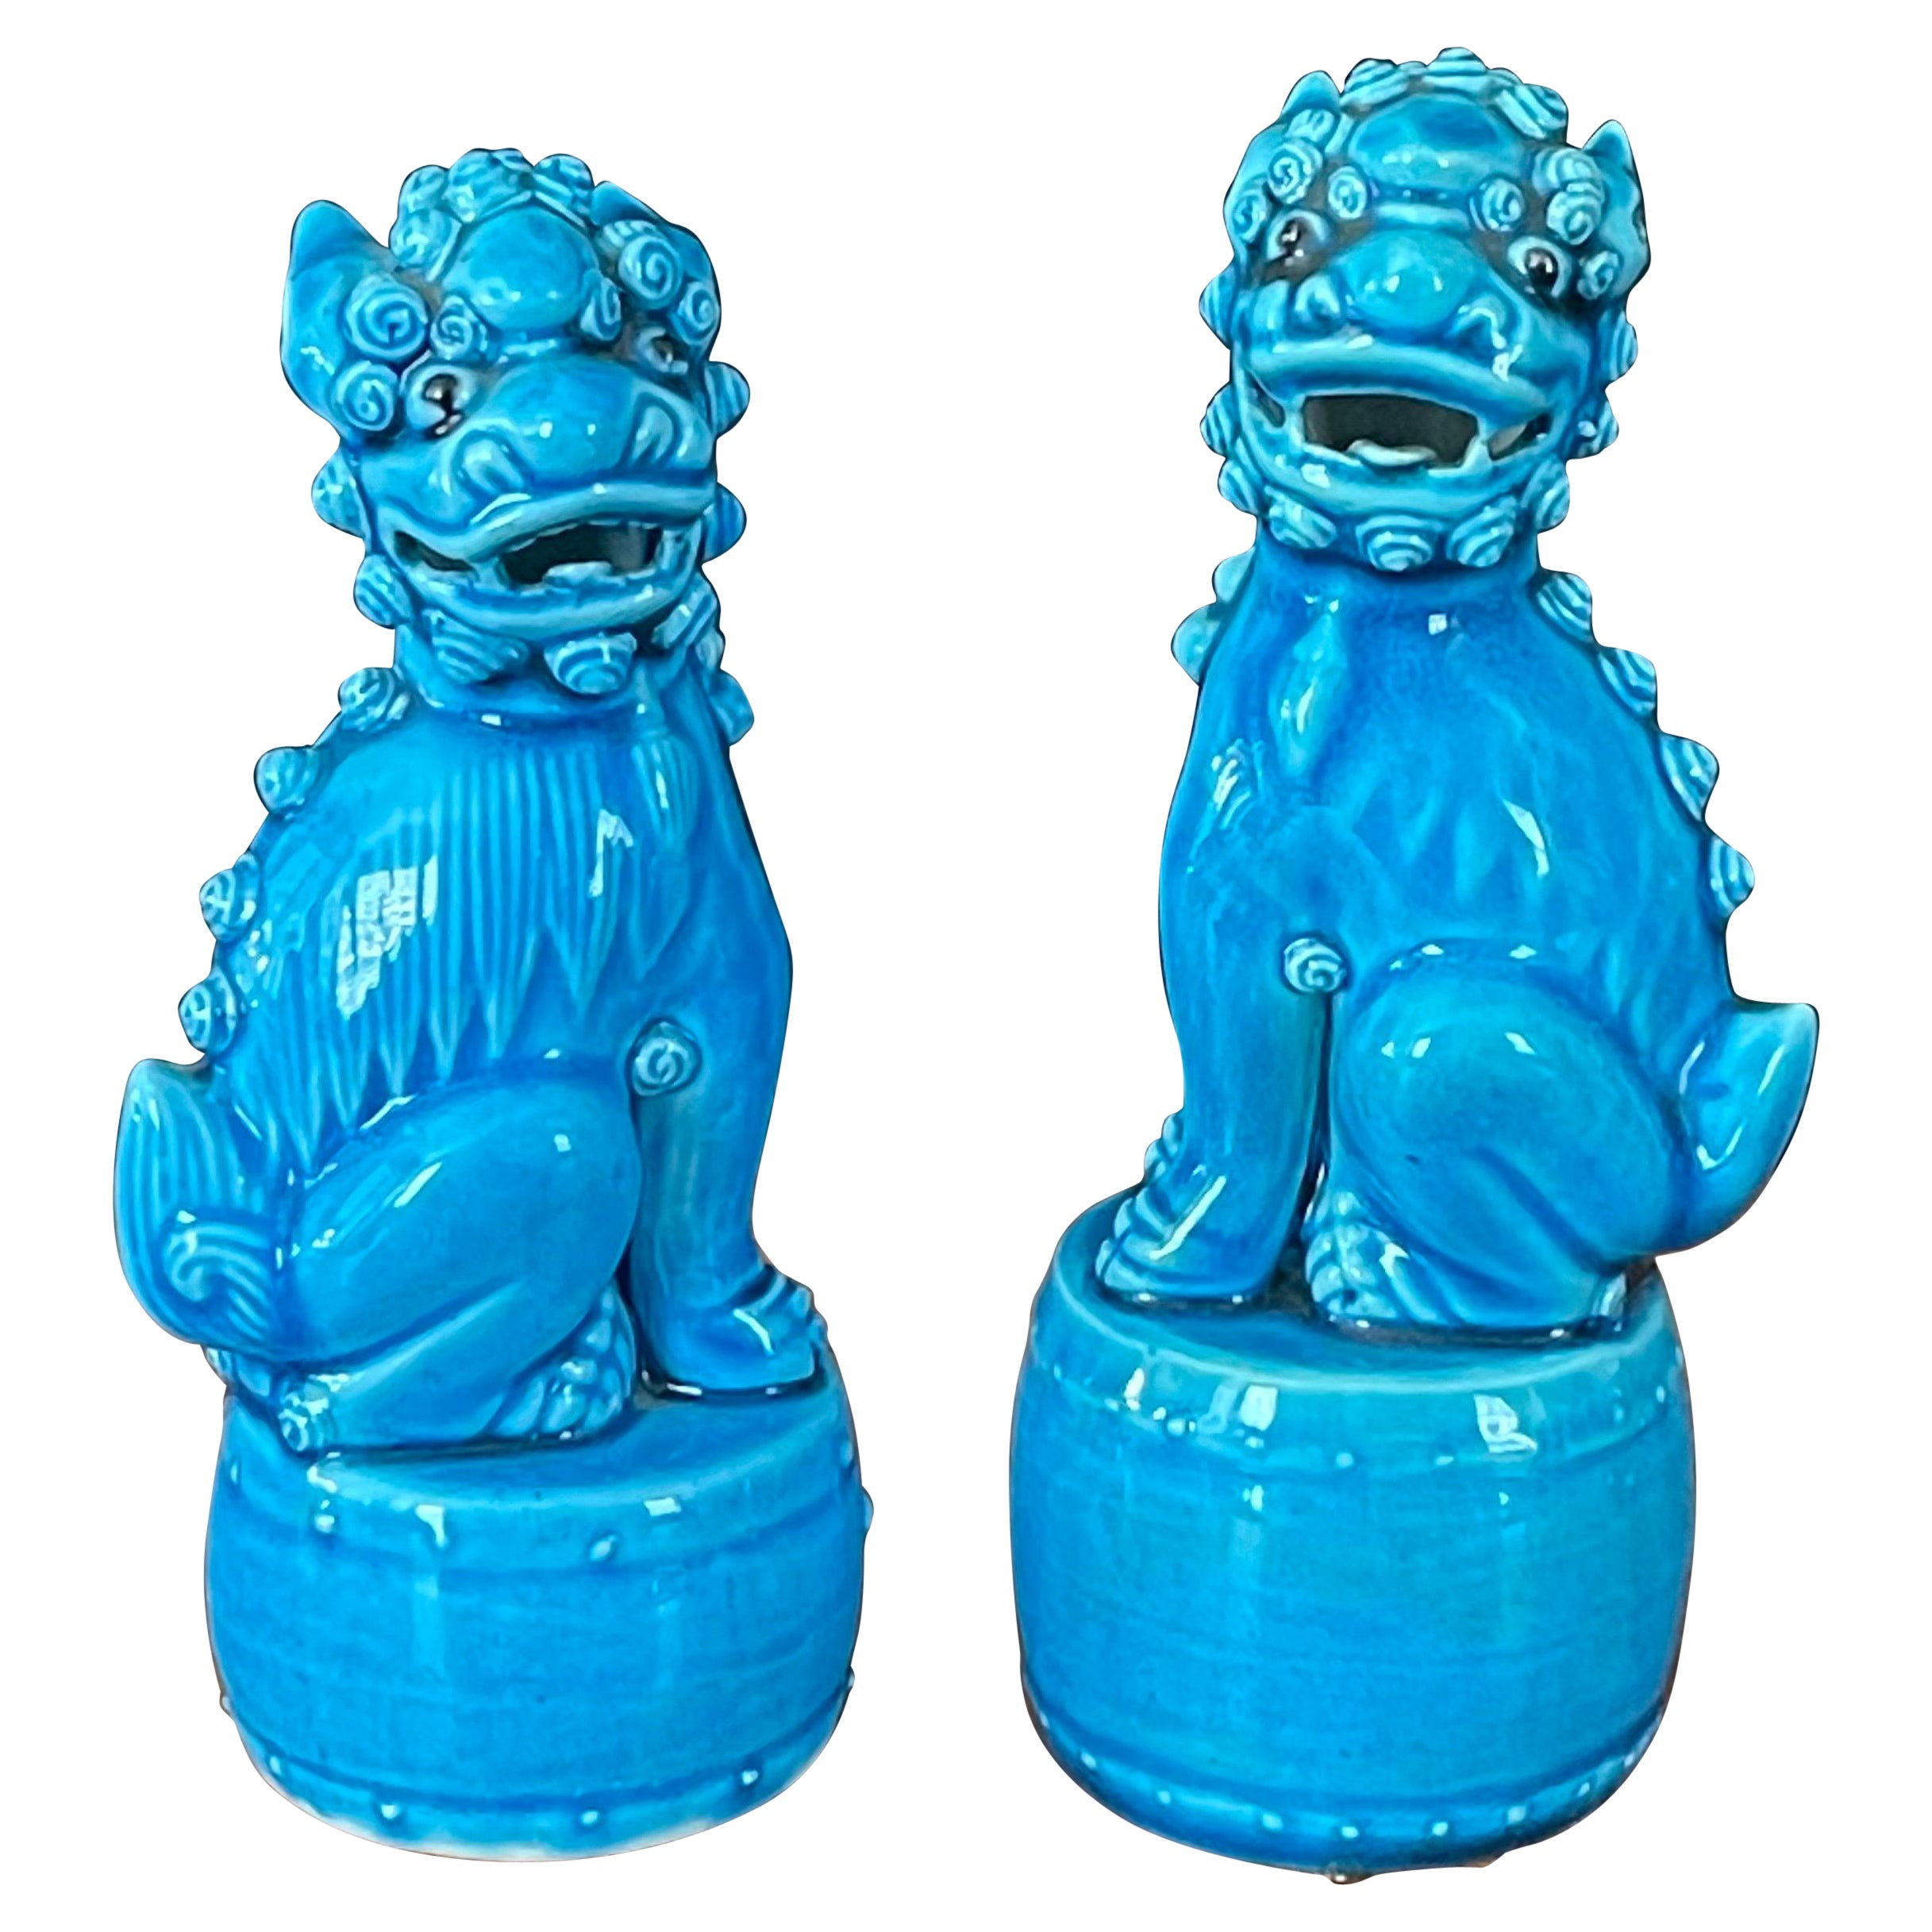 Petite Pair of Vintage Turquoise Blue Ceramic Foo Dog Sculptures